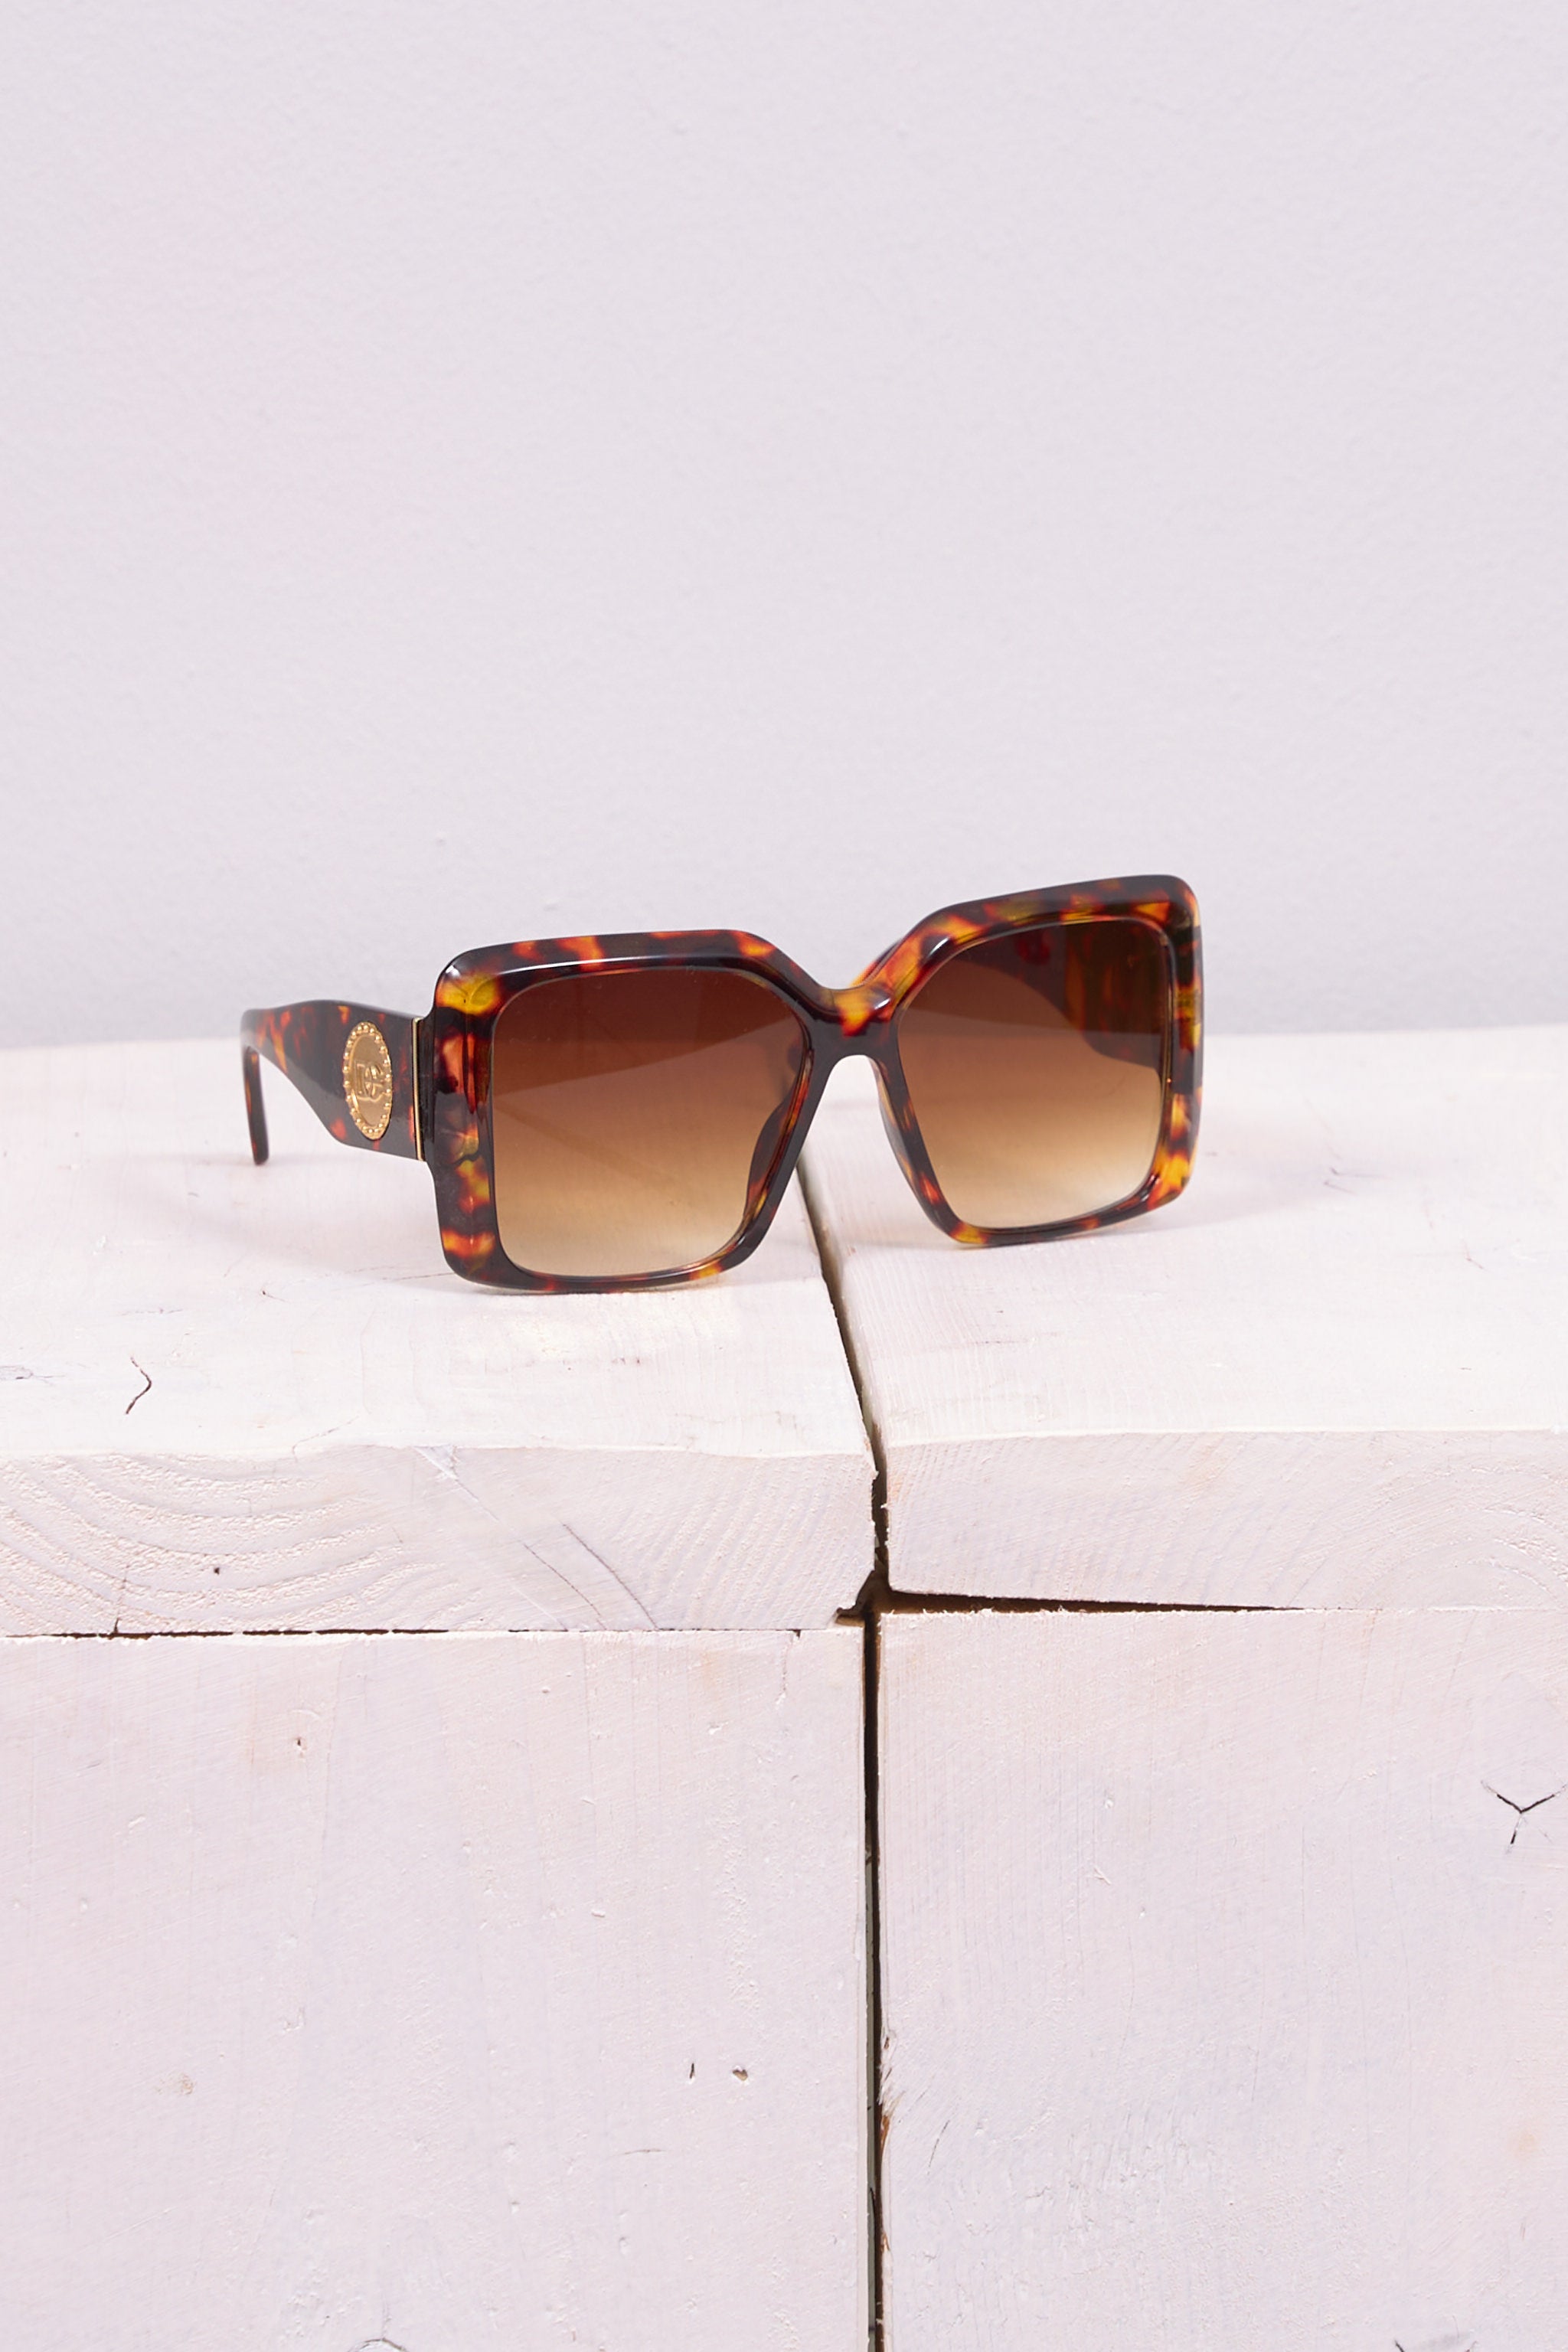 Big sunglasses, black-brown-gold